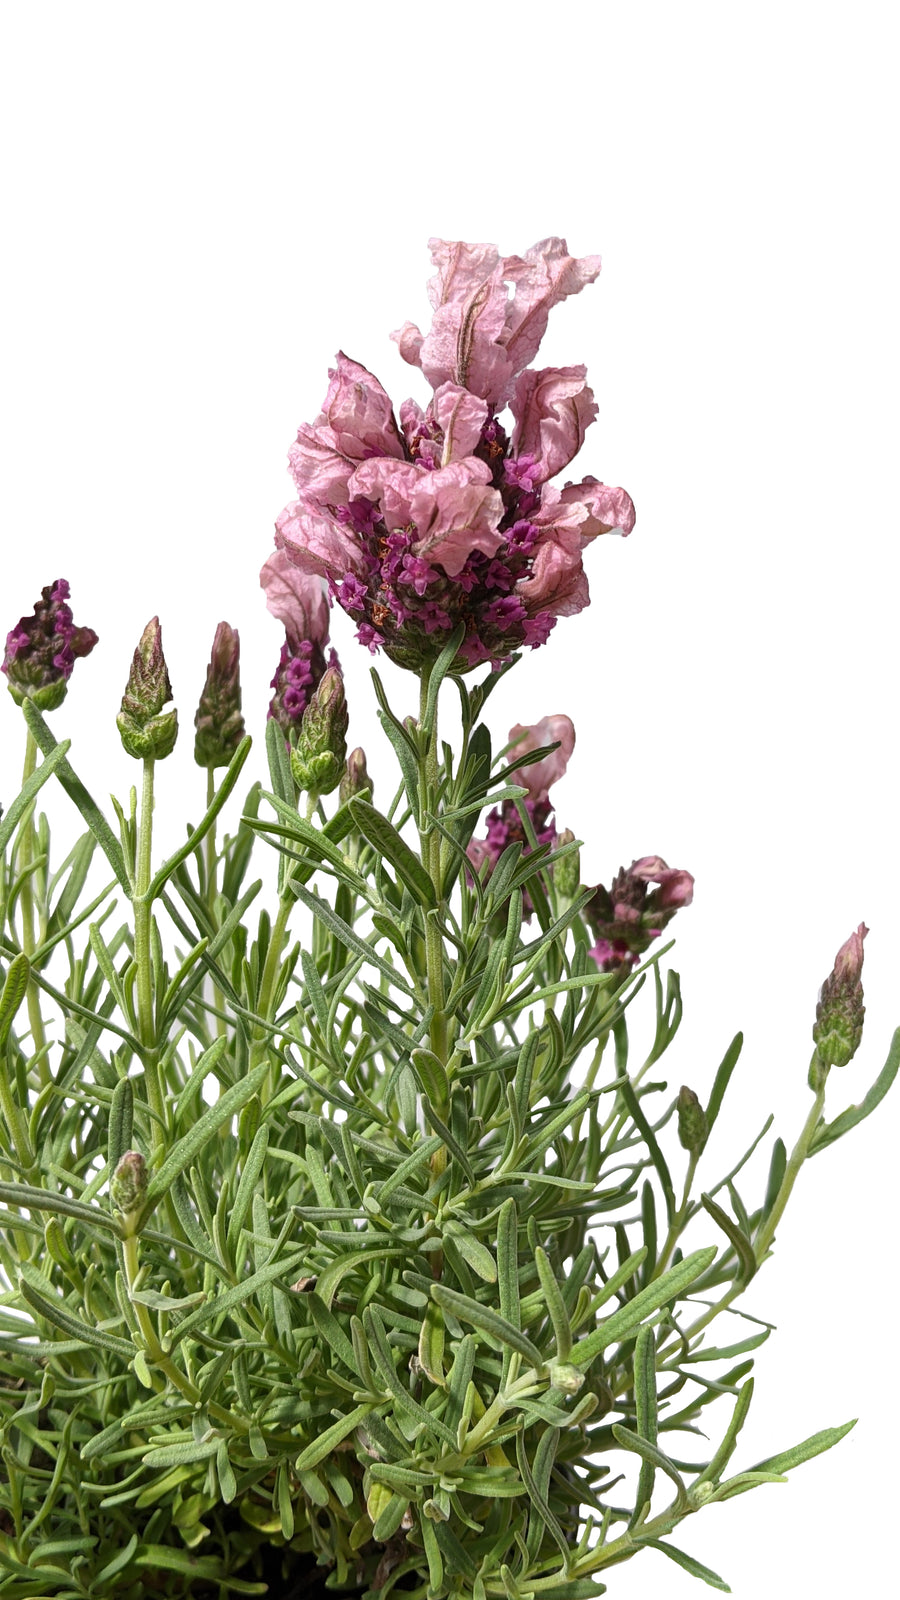 Lavender Live Plant Stoechas 'Madrid Pink'  2.5QT